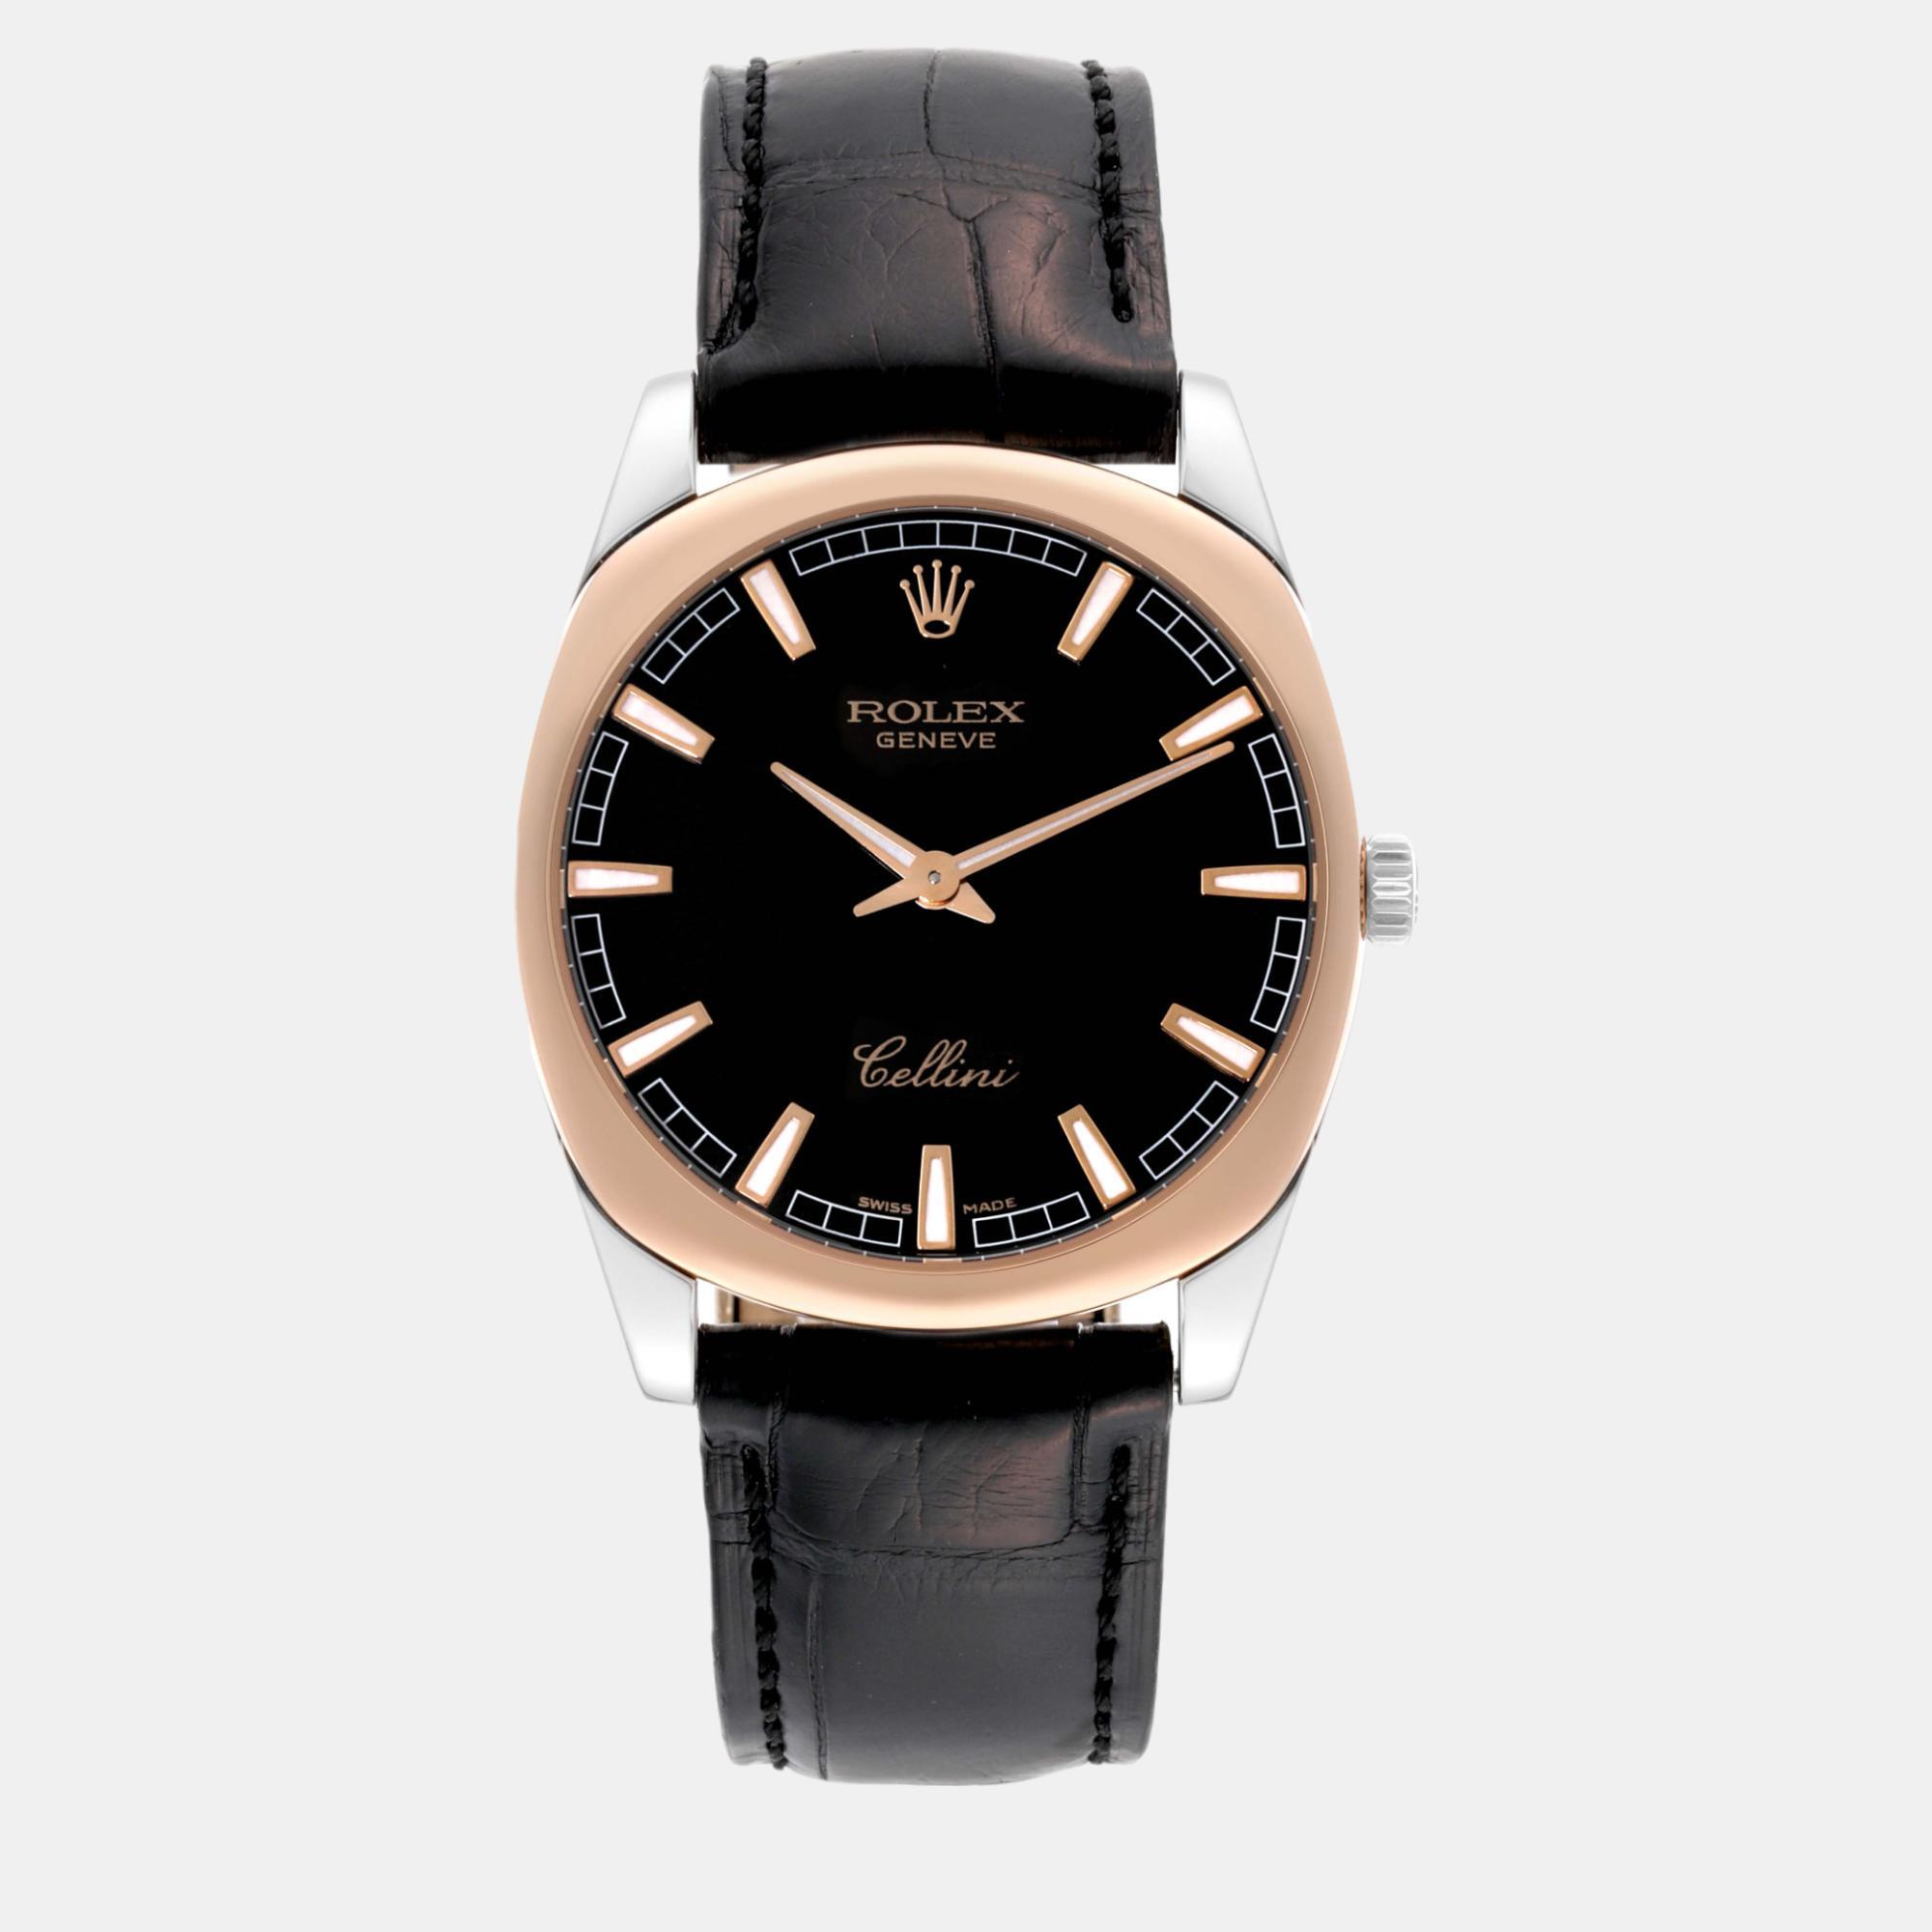 Rolex cellini danaos rose gold black dial men's watch 4243 38 mm